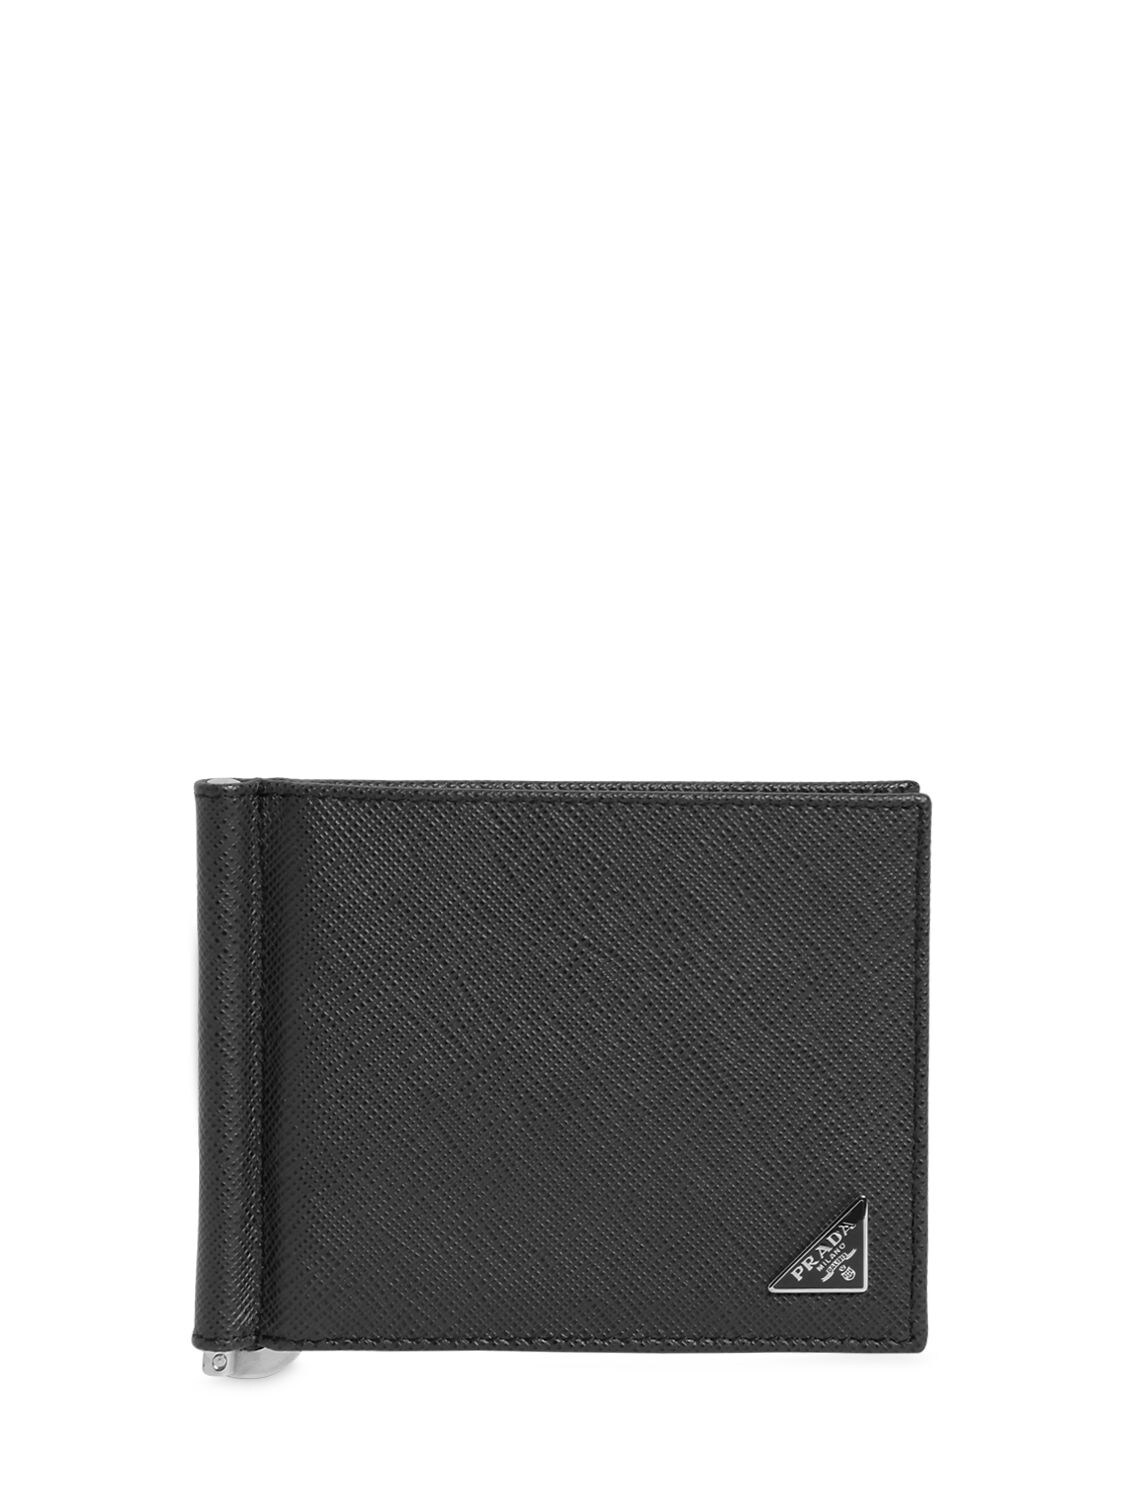 Prada Saffiano Leather Wallet W/ Money Clip In Black